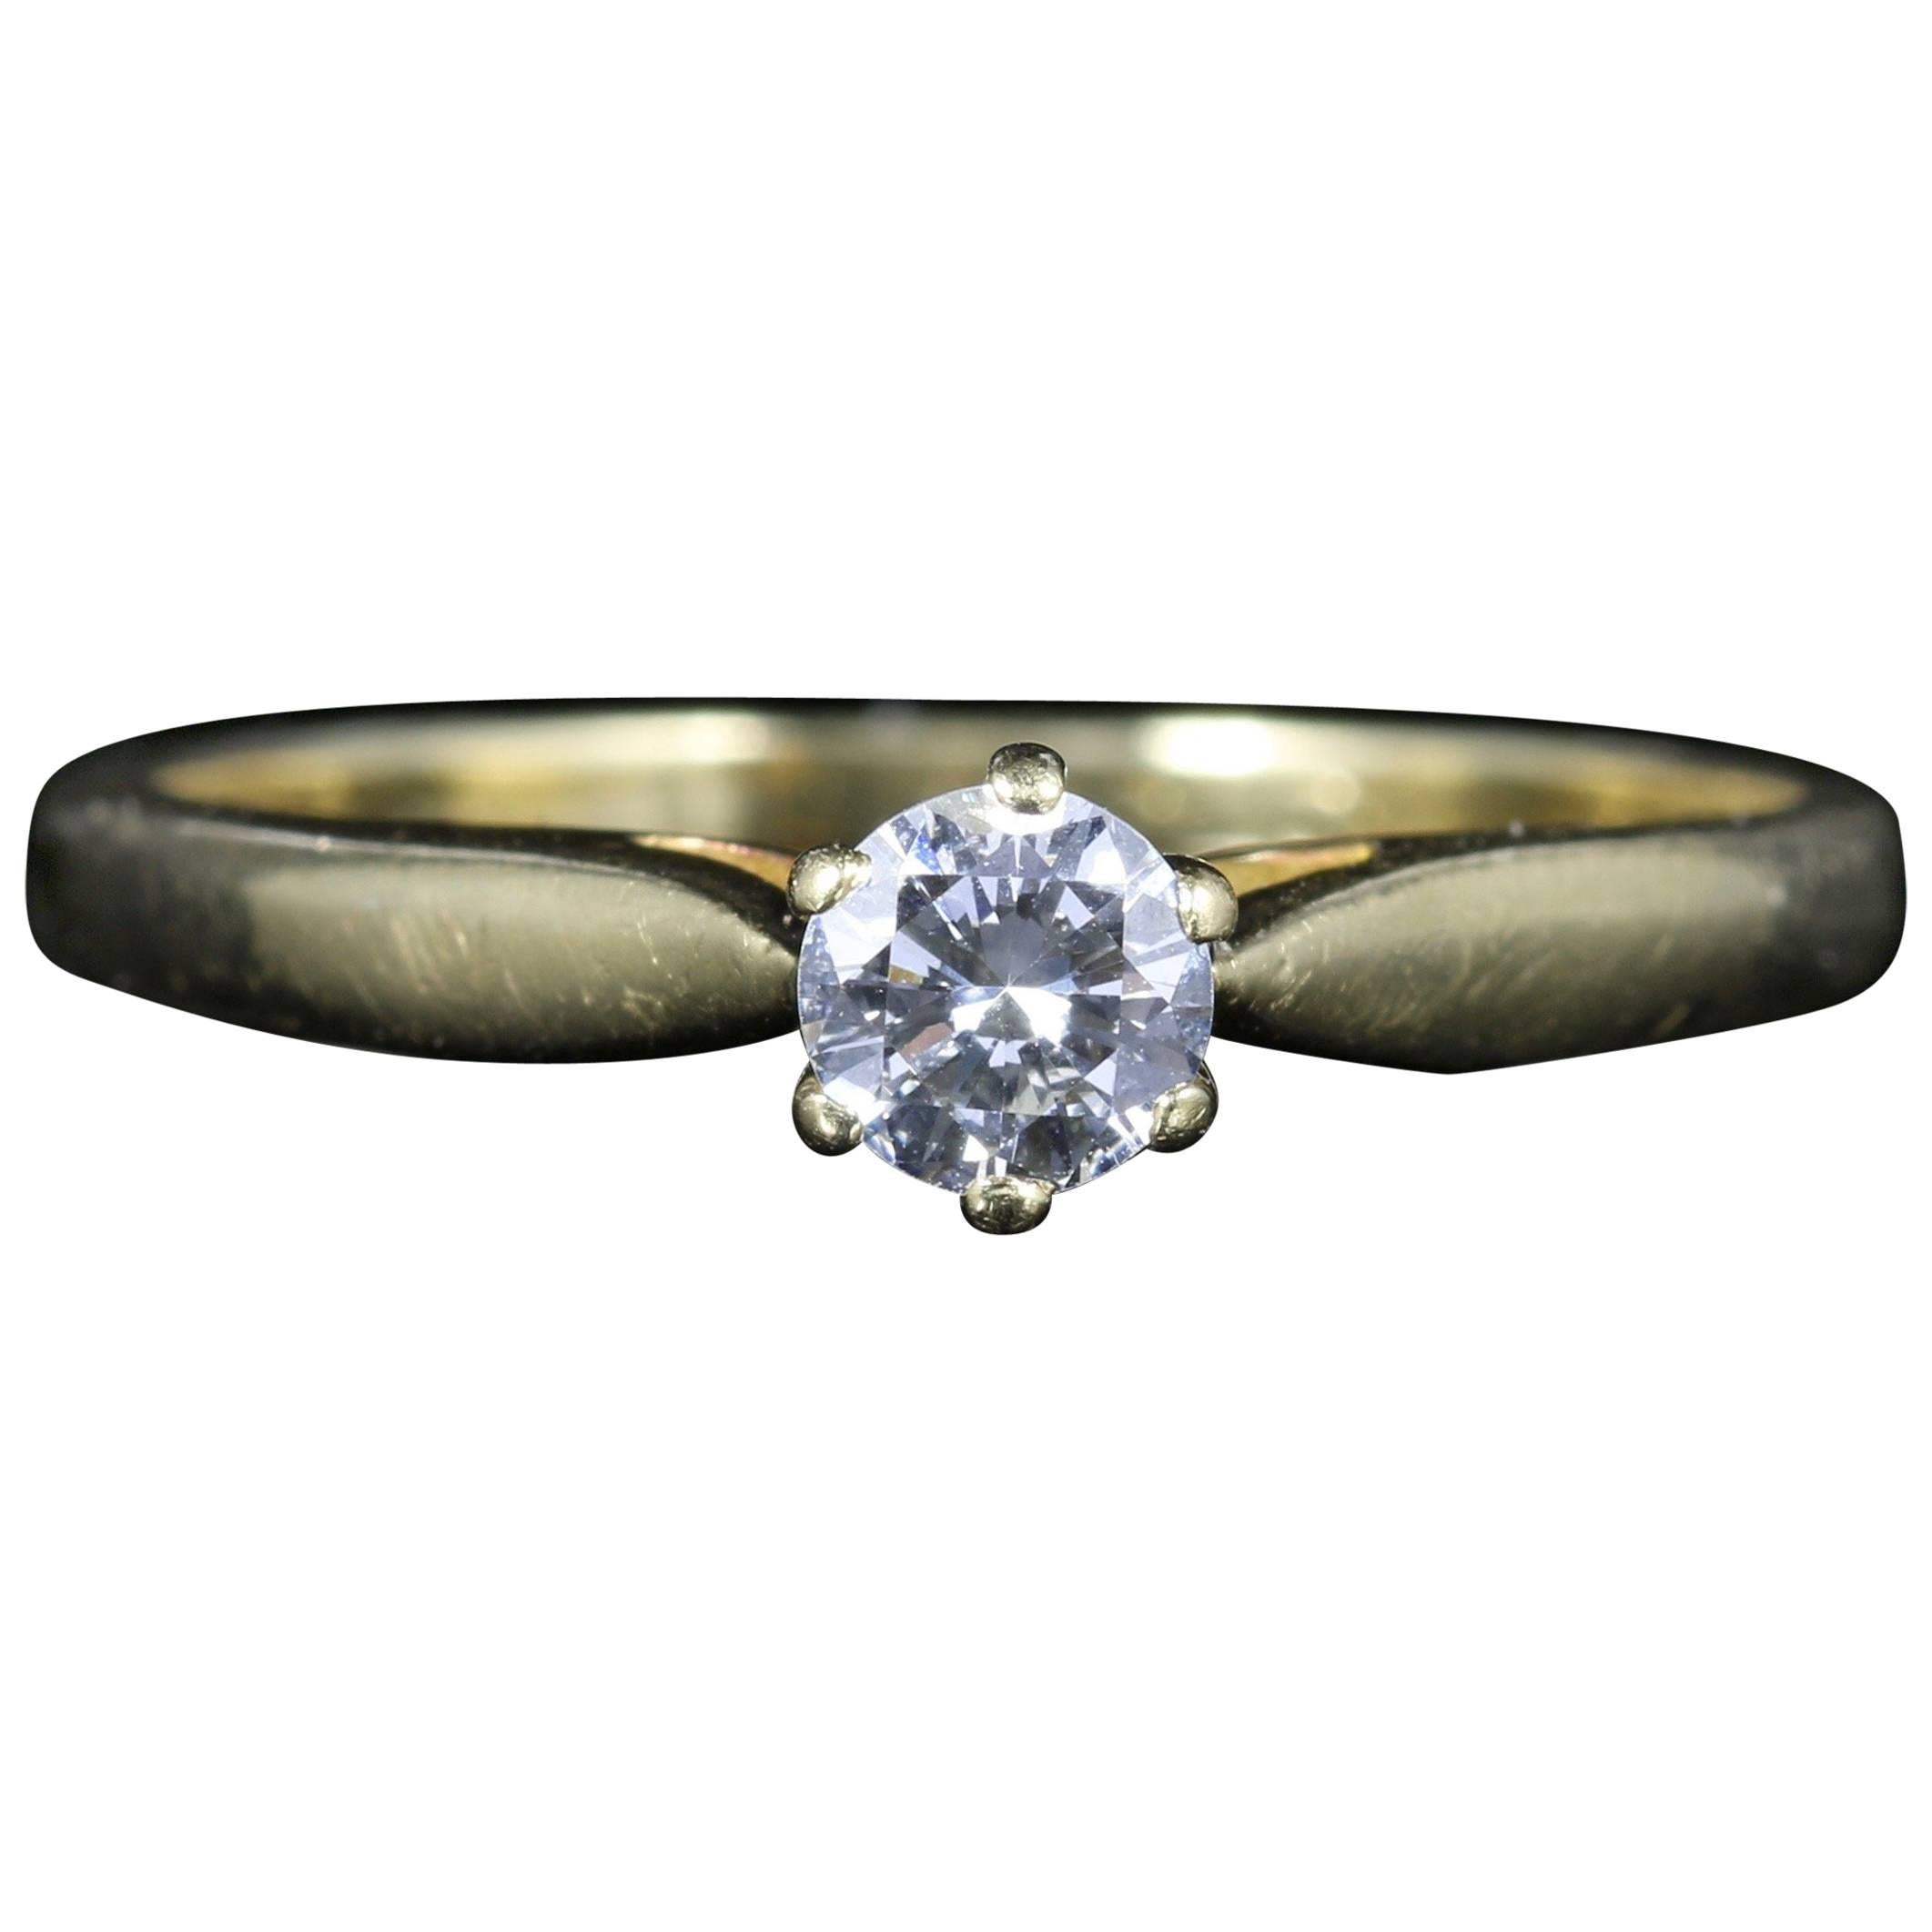 Antique Victorian Diamond Solitaire Engagement Ring, circa 1900